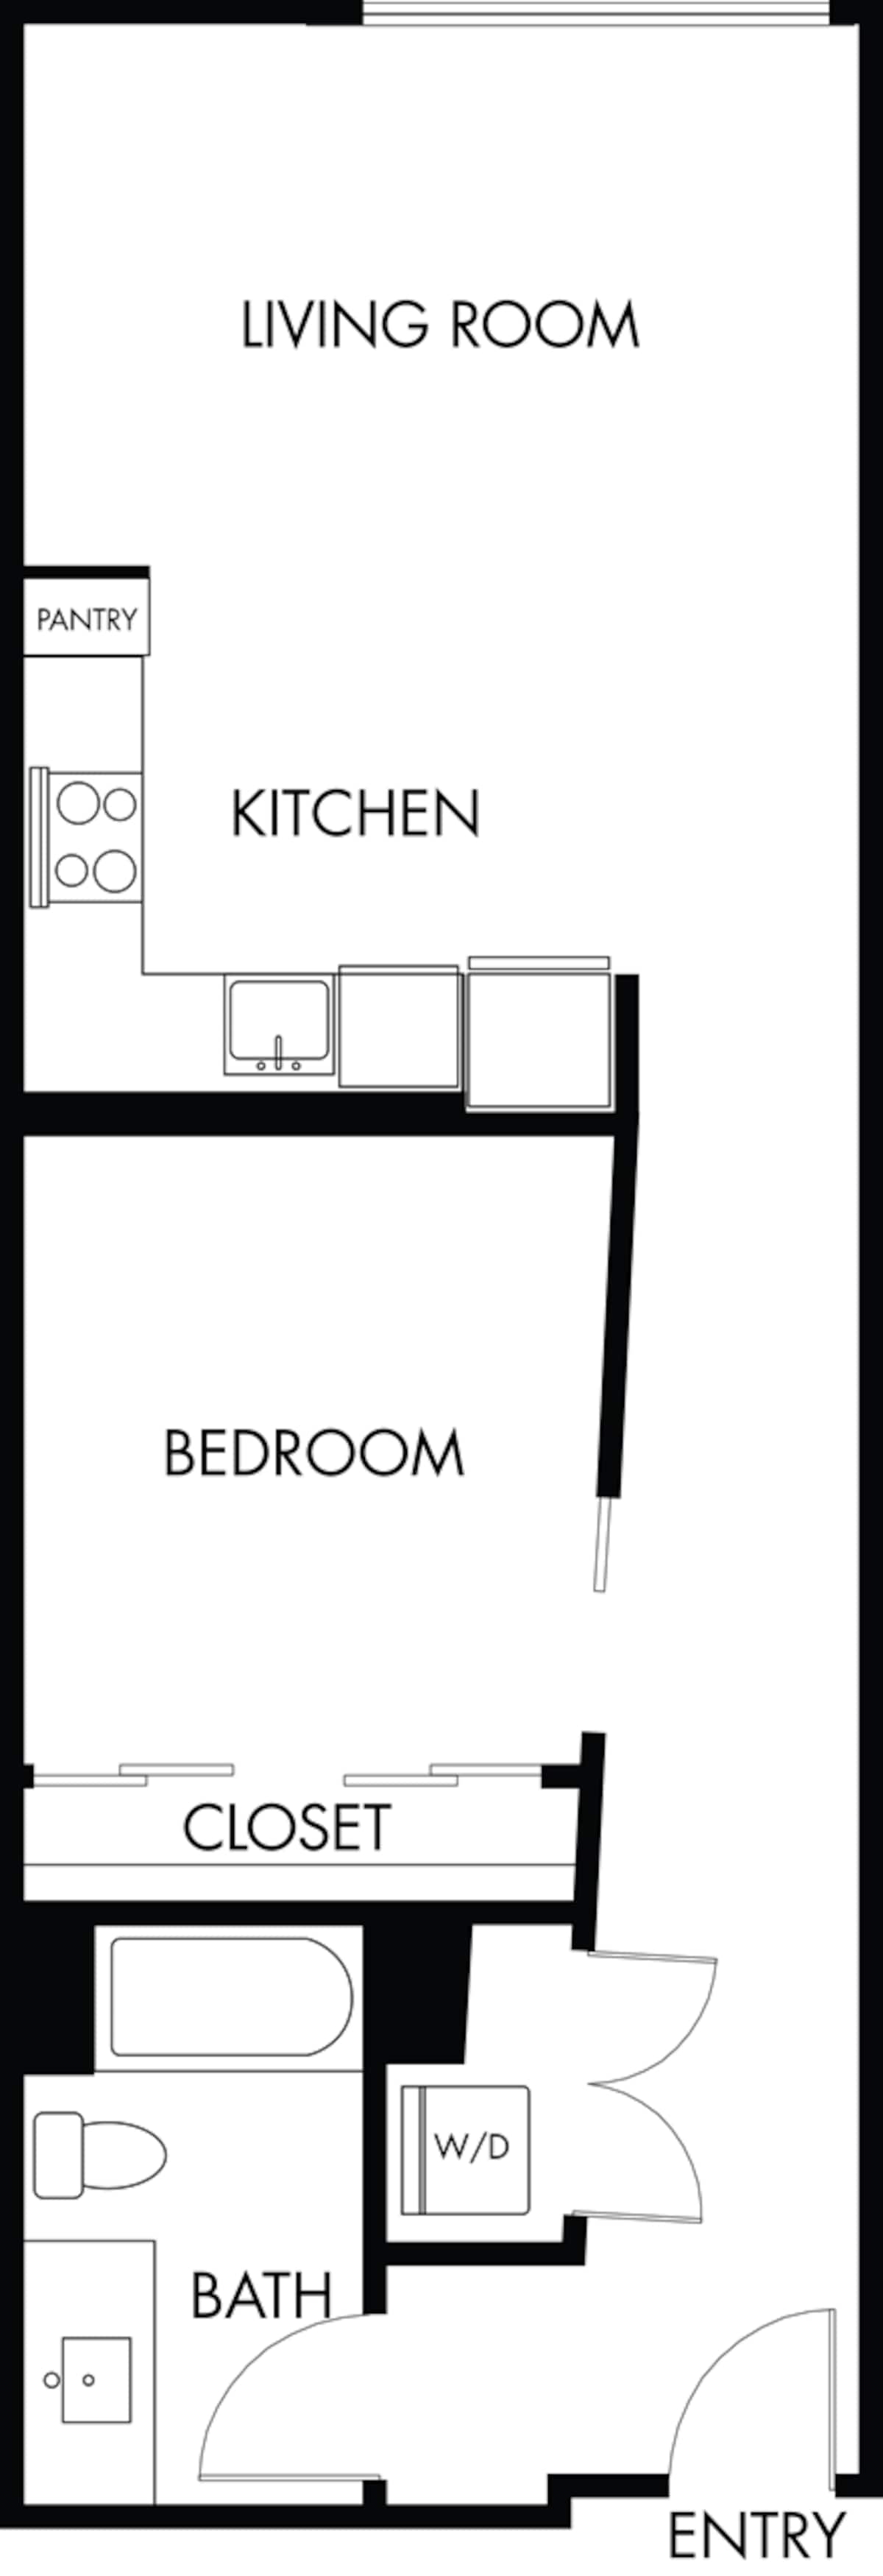 Floorplan diagram for O1.1, showing 1 bedroom